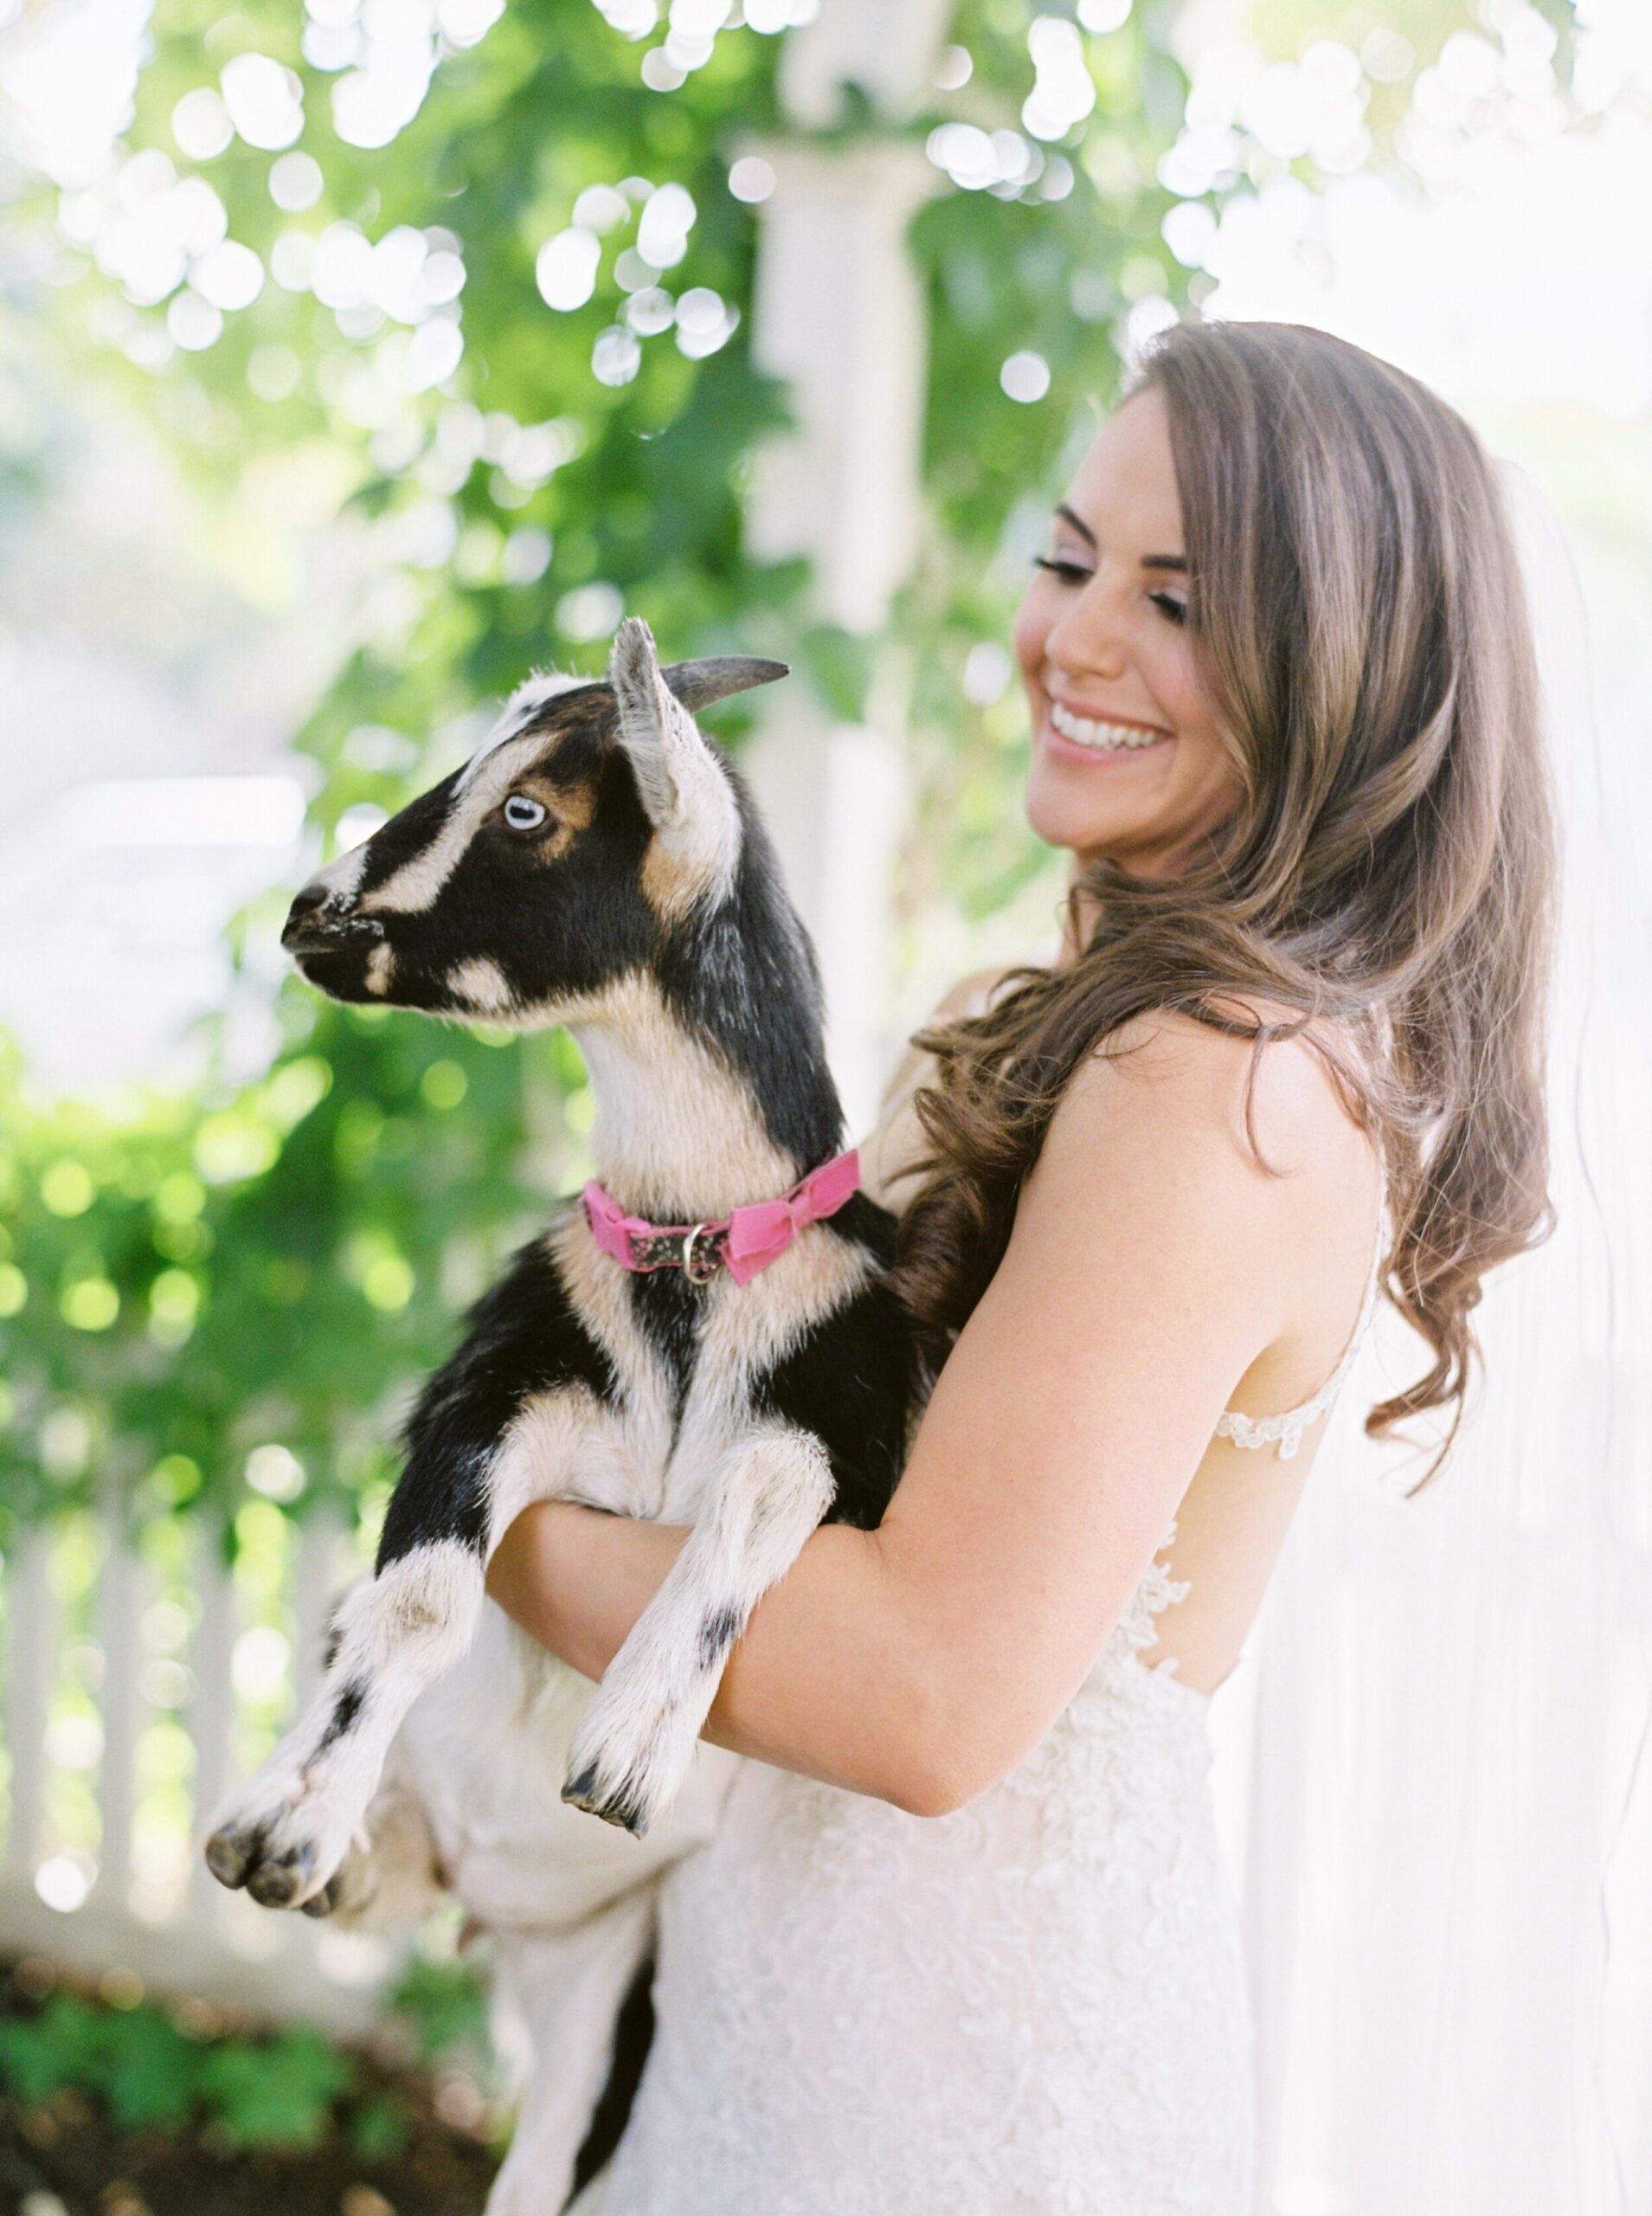  kelowna wedding photographer | bride and groom portraits baby goat | fine art film photographer justine milton photography 